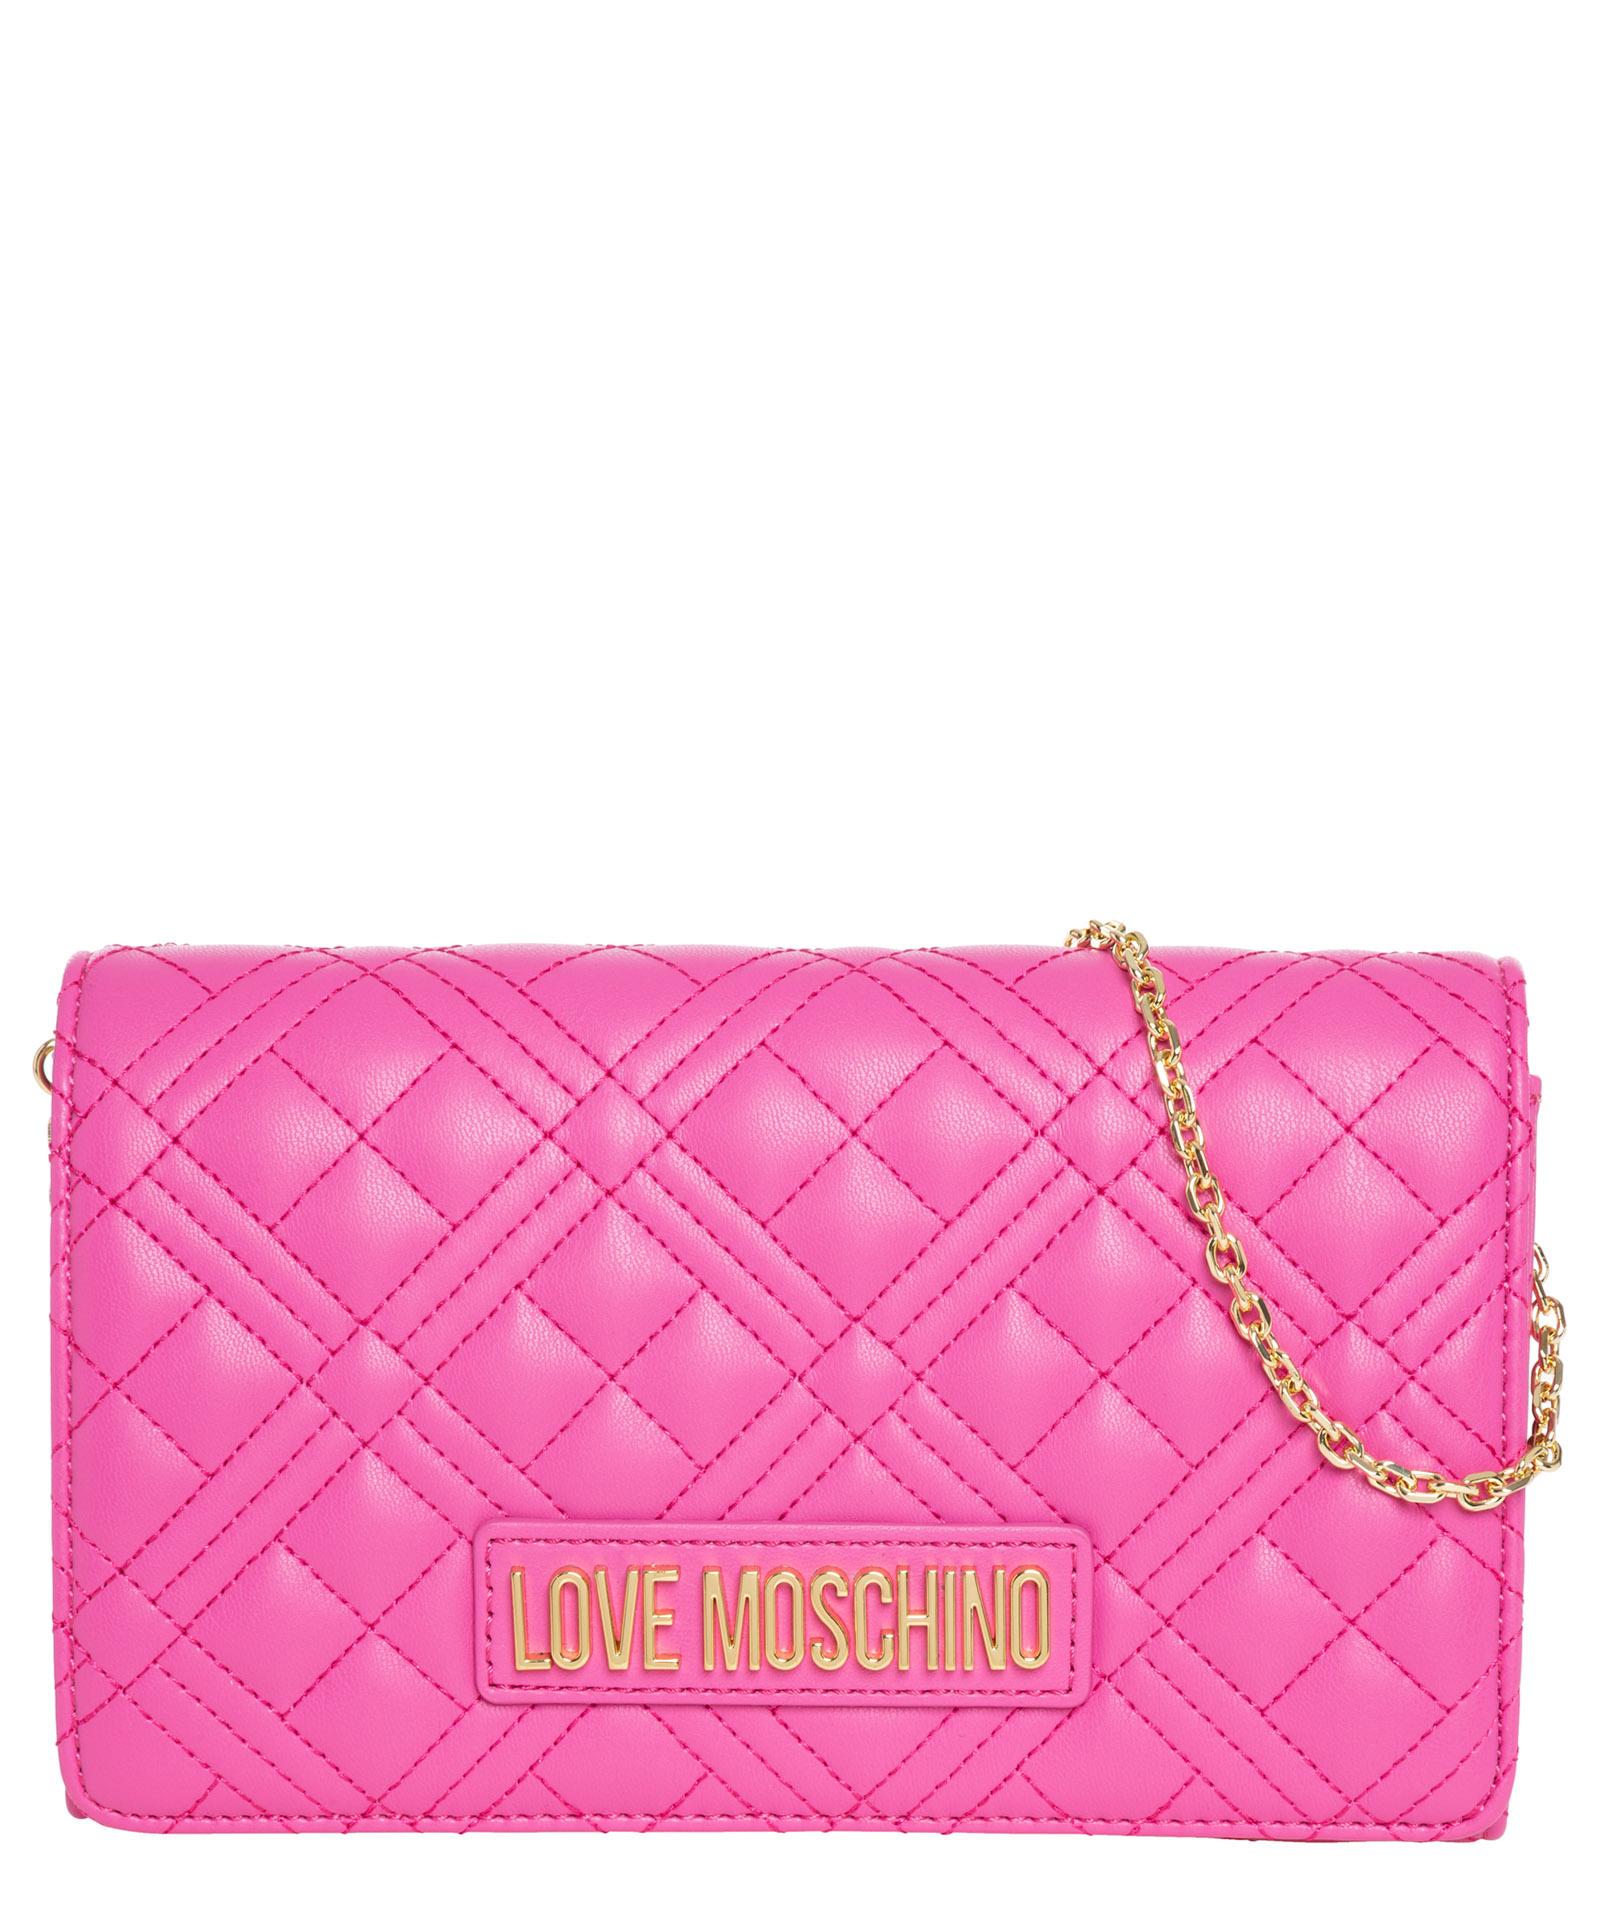 Love Moschino Crossbody Bag in Pink | Lyst